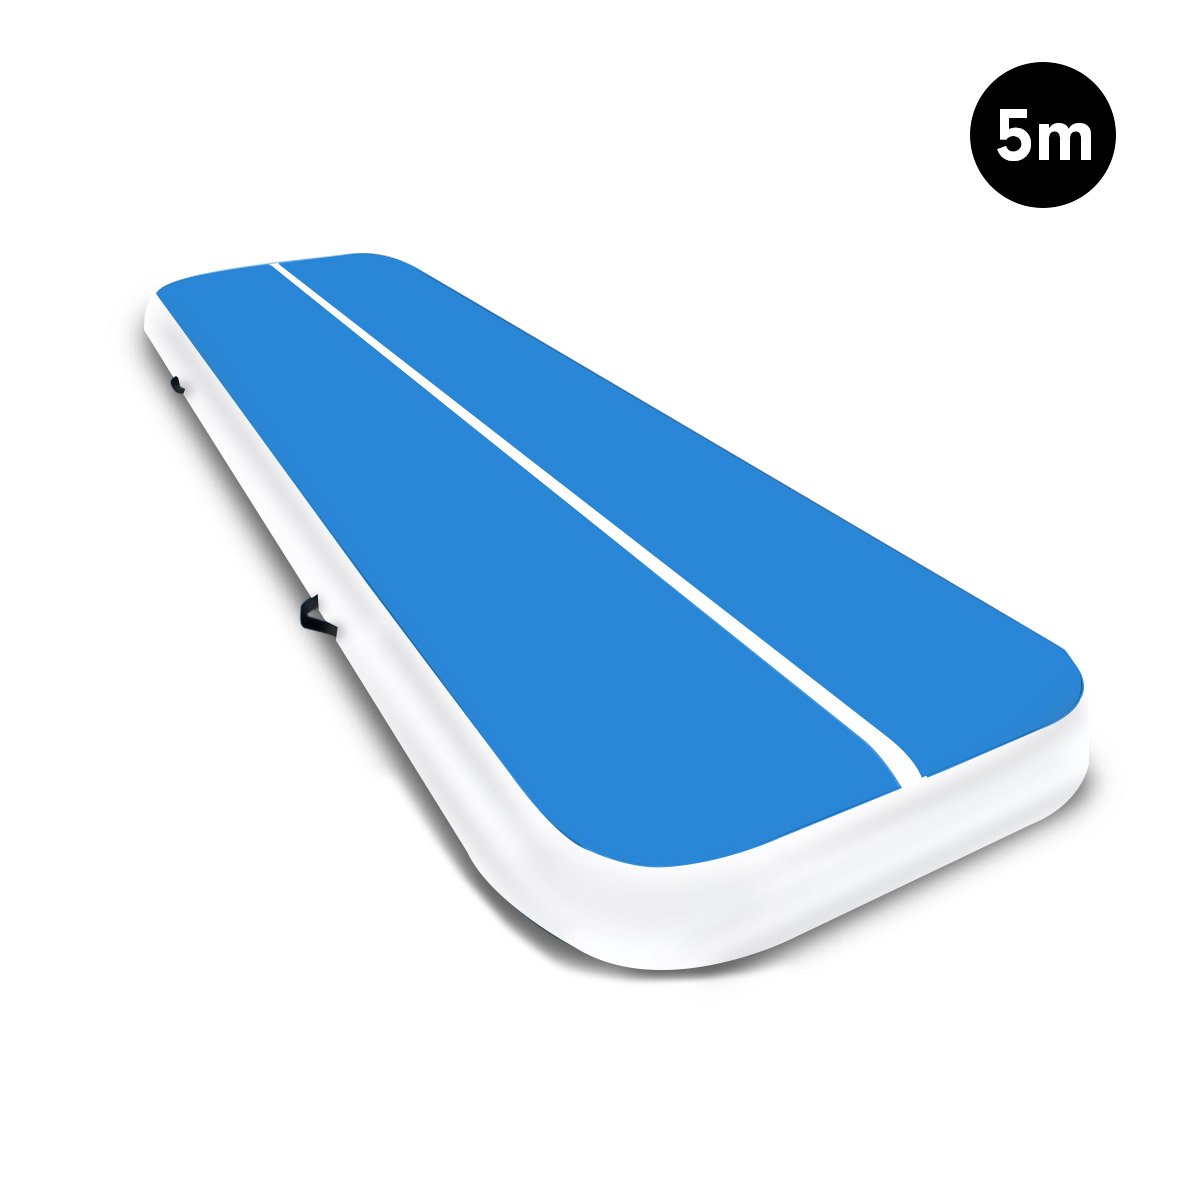 5m x 1m Air Track Inflatable Tumbling Gymnastics Mat - Blue White 1